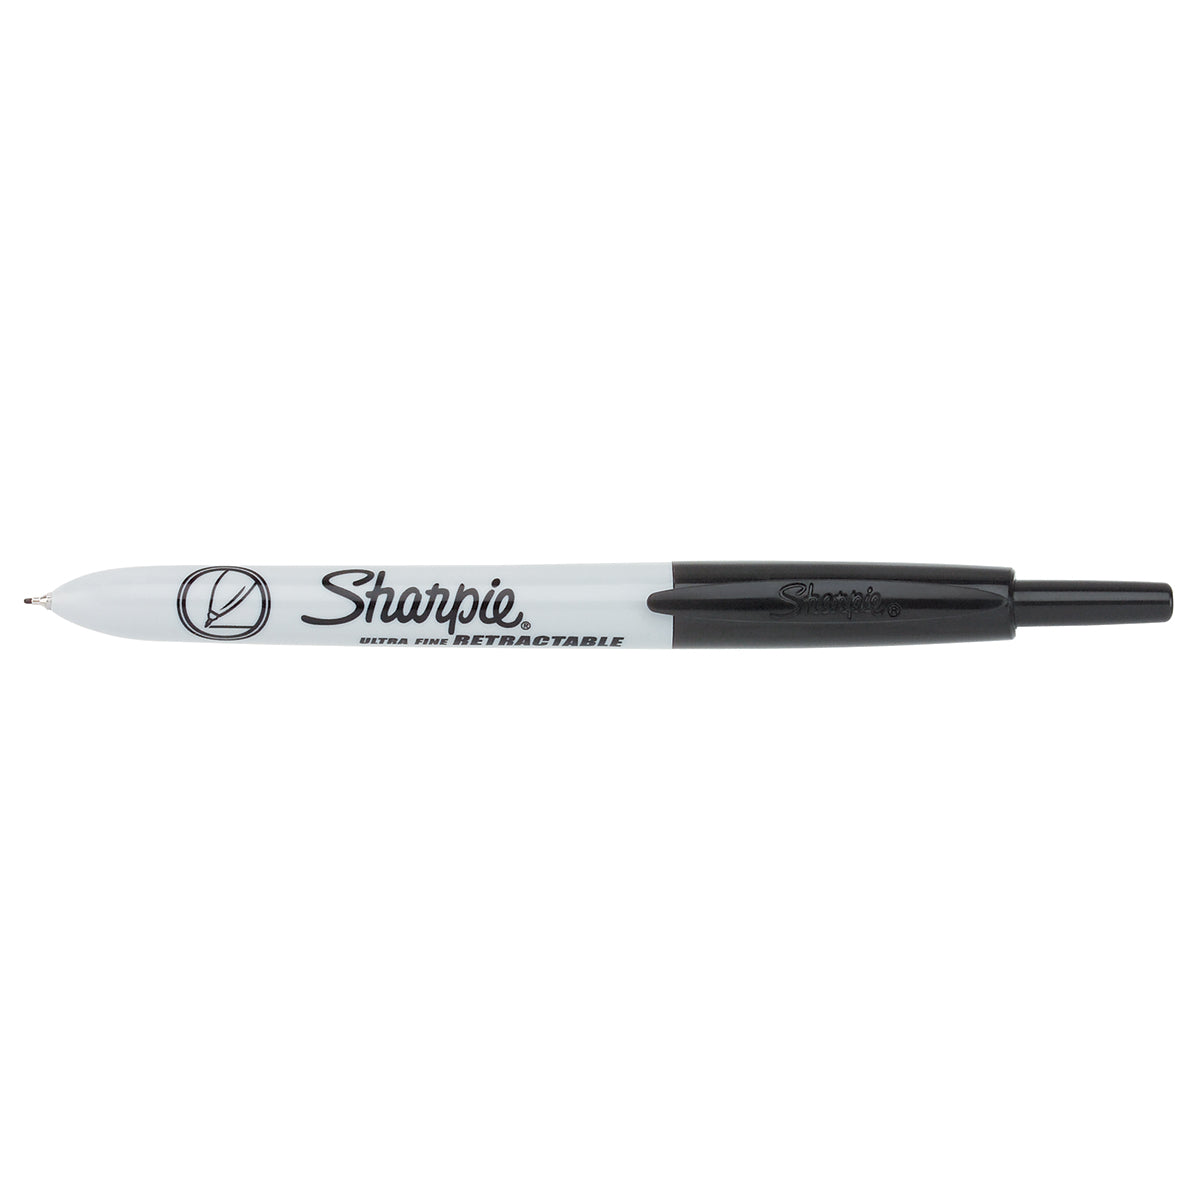 Mini Retractable Ballpoint Pen, Mini Sharpie Markers, Highlighters